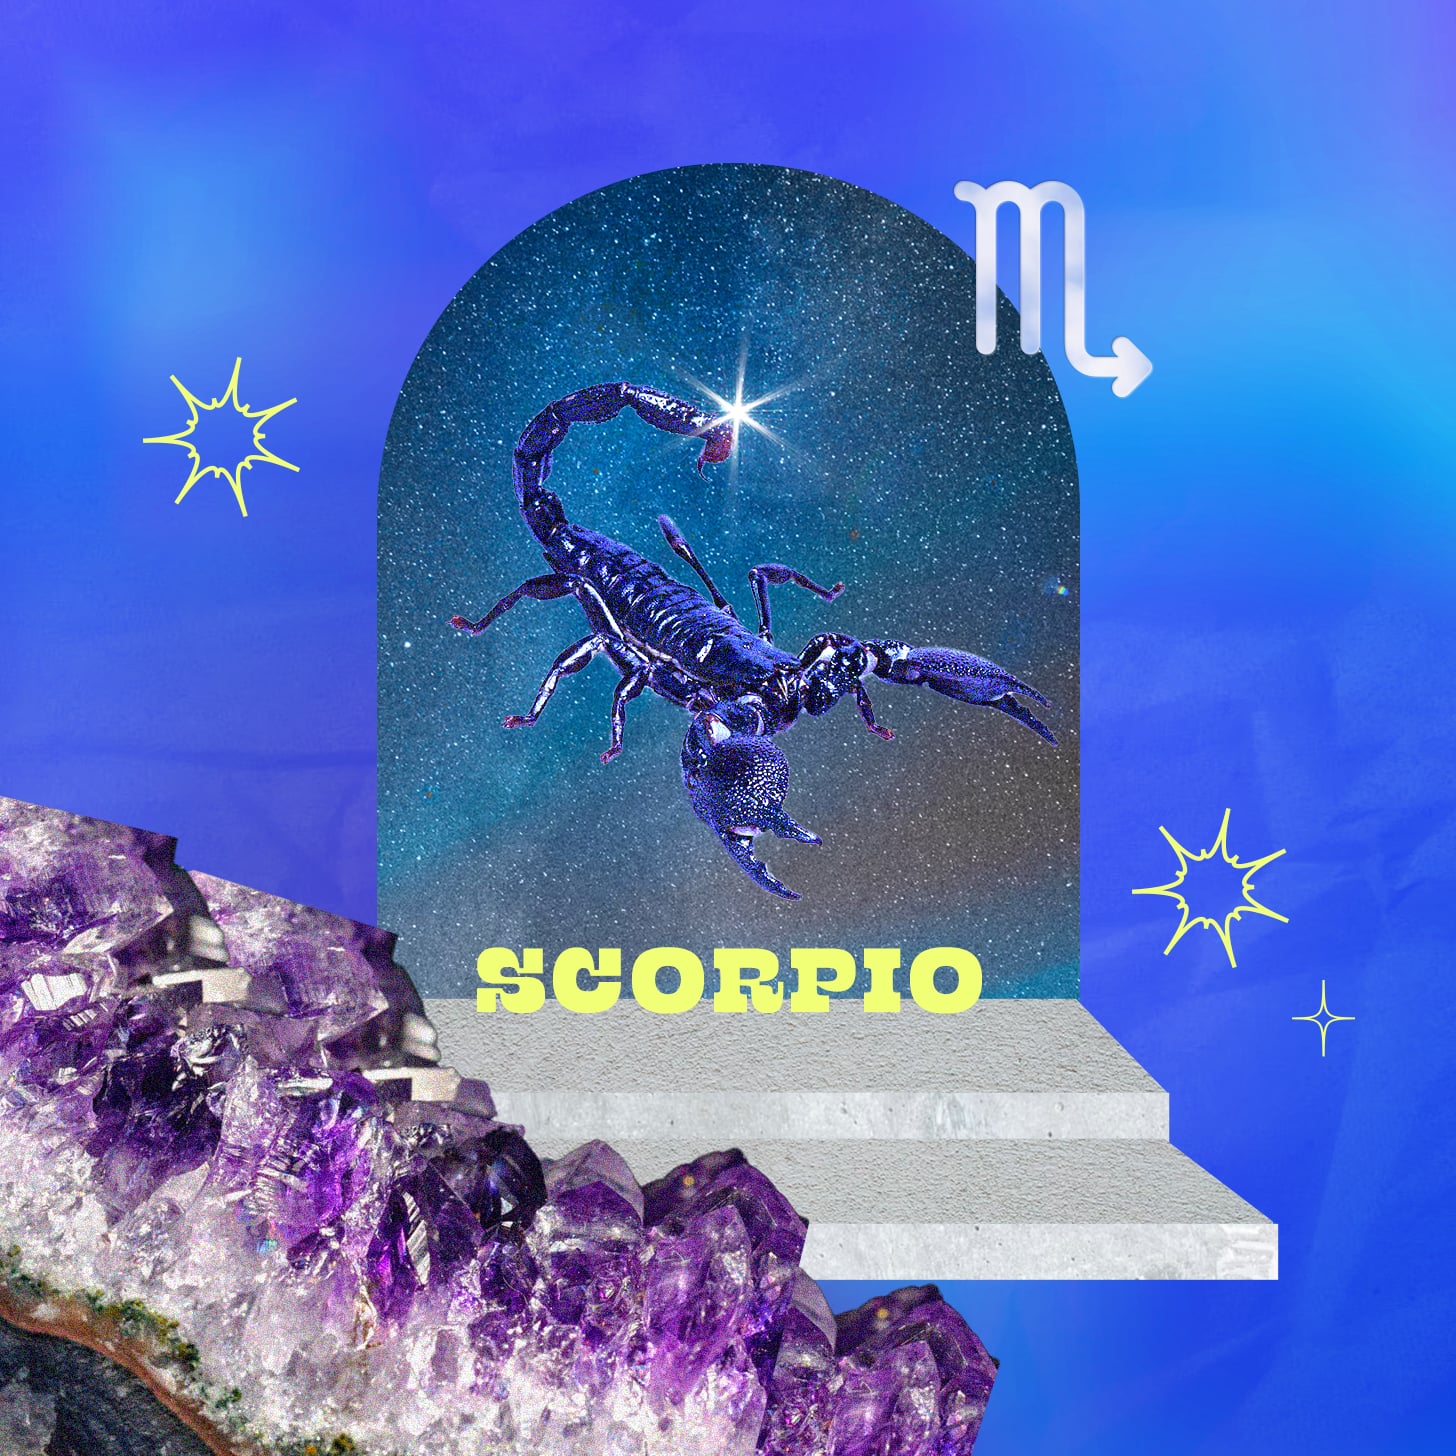 Scorpio weekly horoscope for October 9, 2022